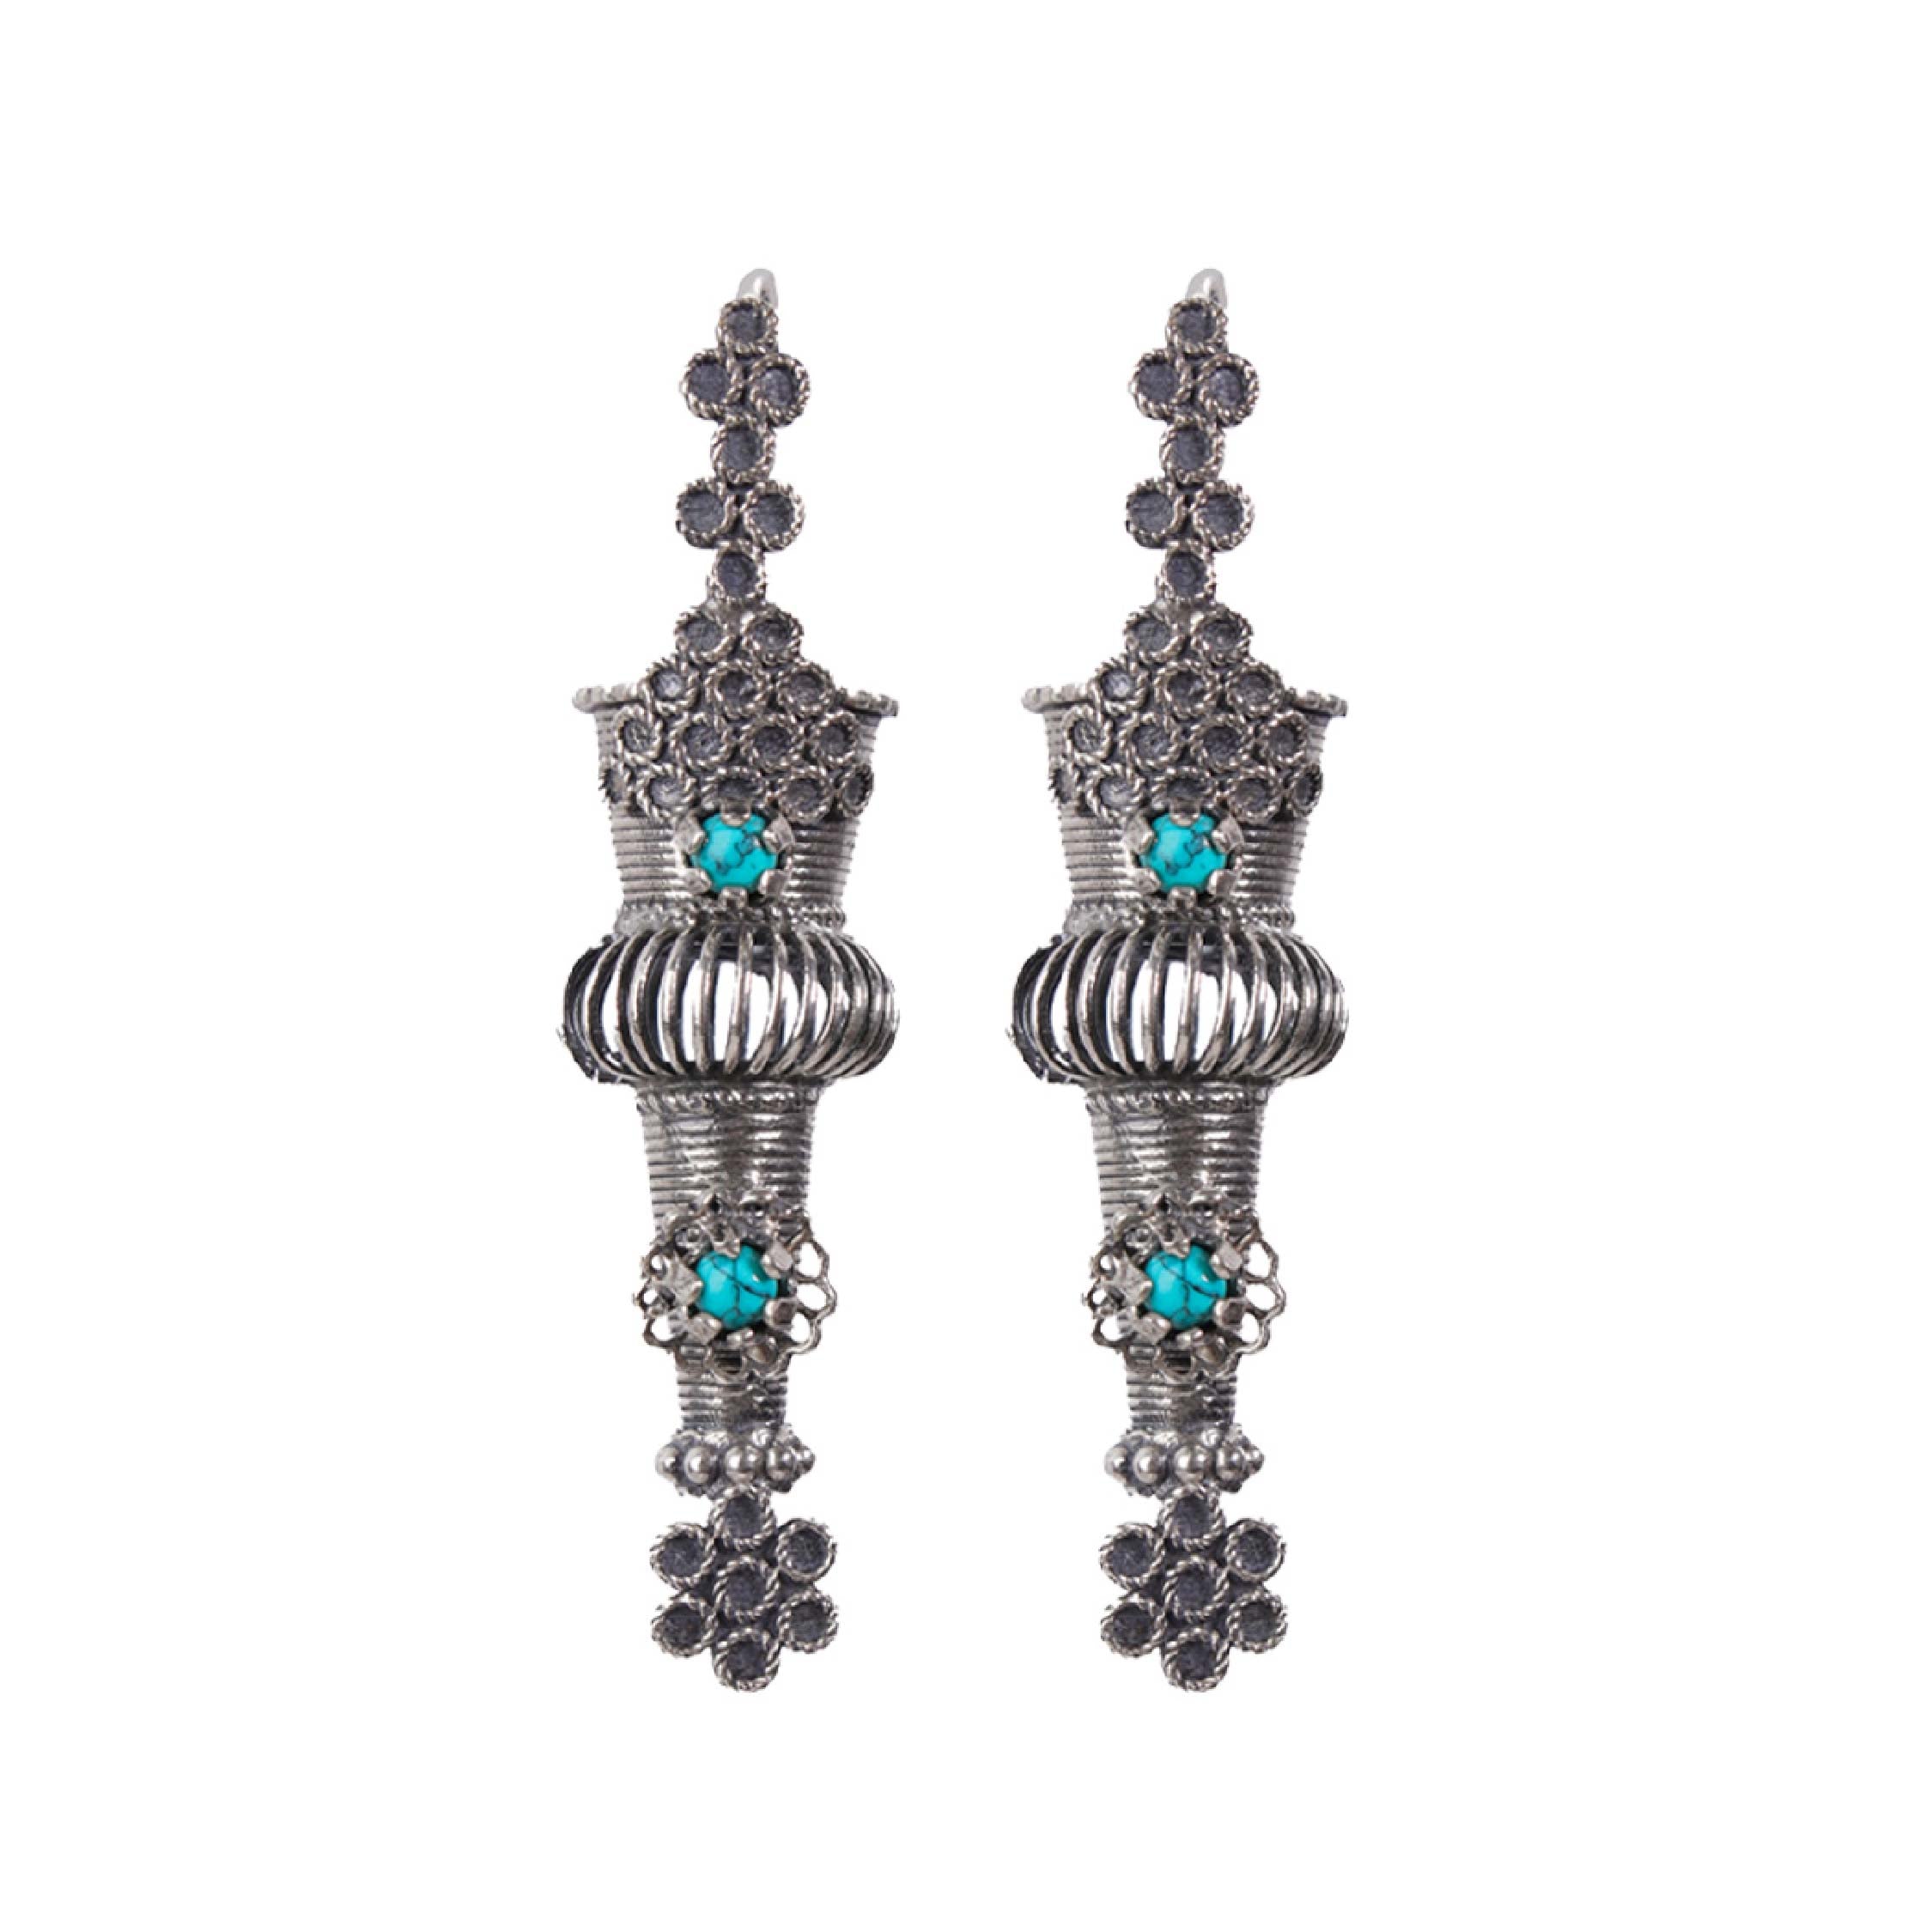 Nagali silver earrings by Moha